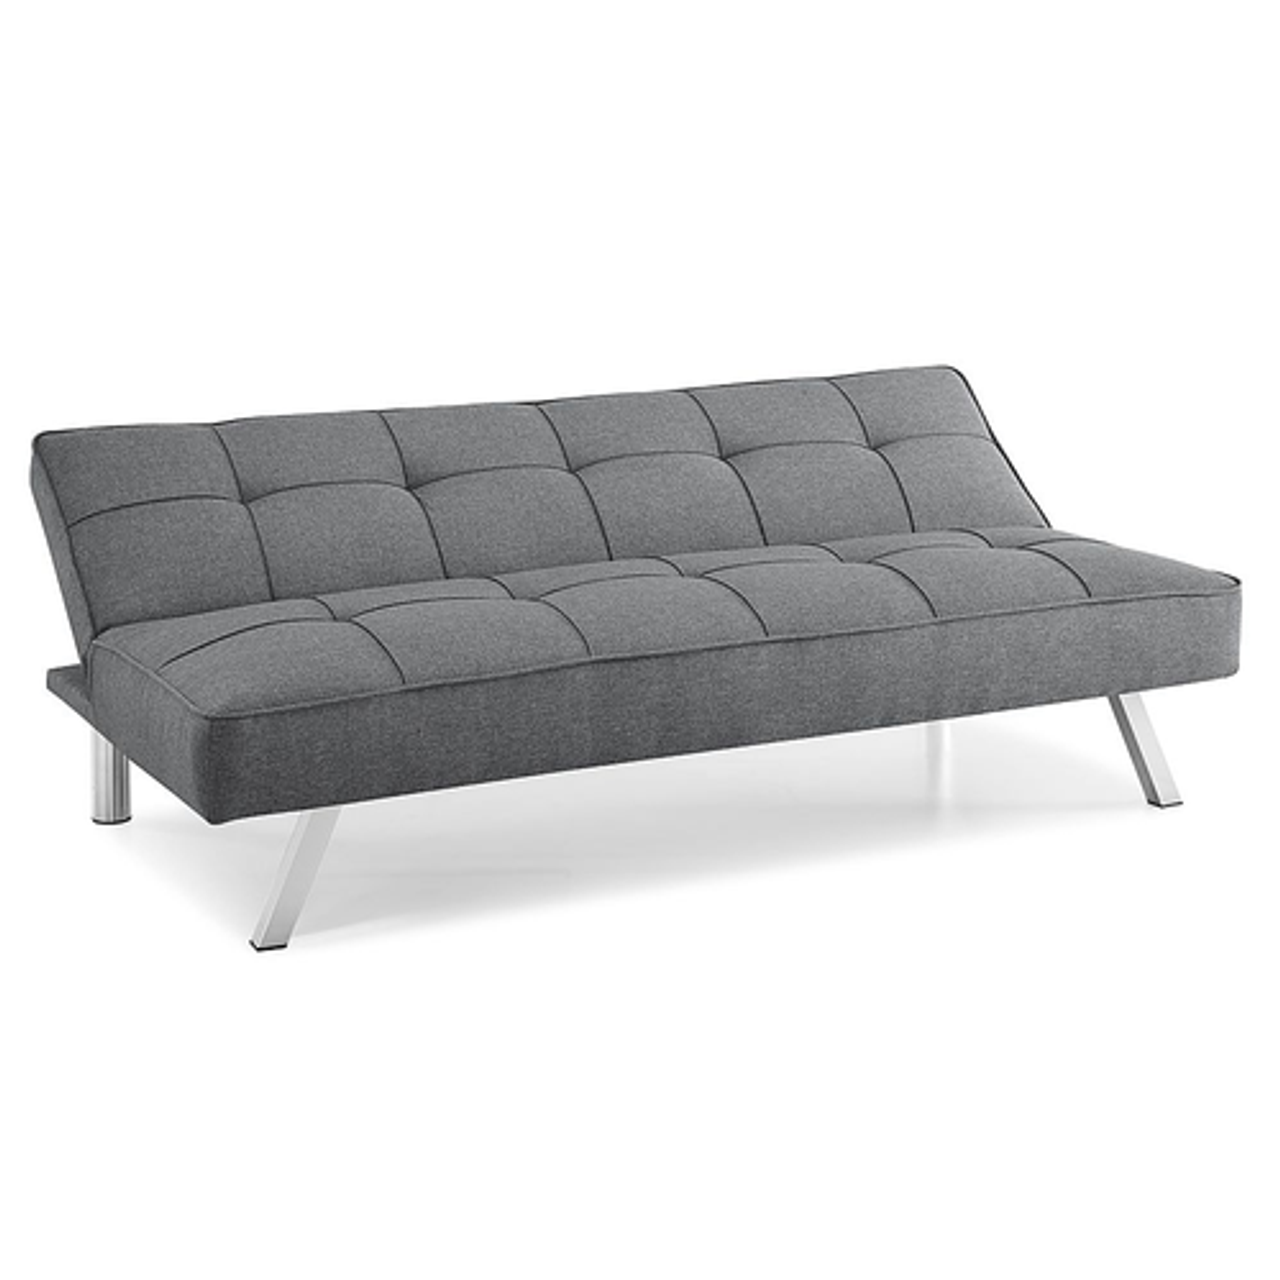 Serta - Corey Multi-Functional Sofa Lounger Sleeper by Serta® Dream Convertibles, Comfort Gray - Charcoal